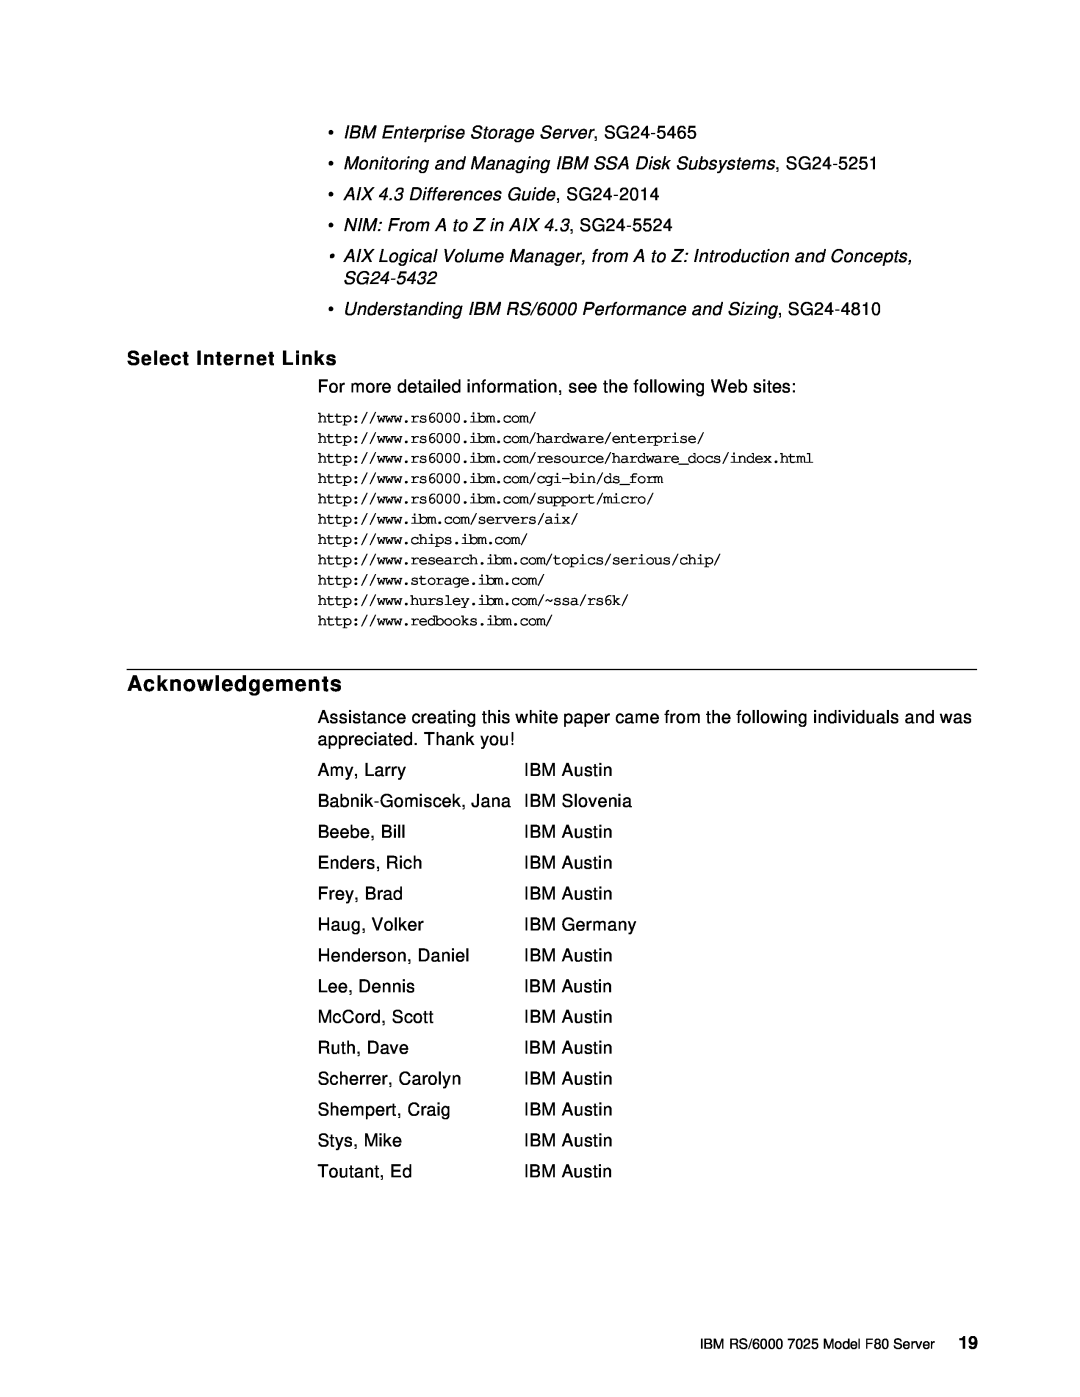 IBM F80 manual Acknowledgements, Select Internet Links 